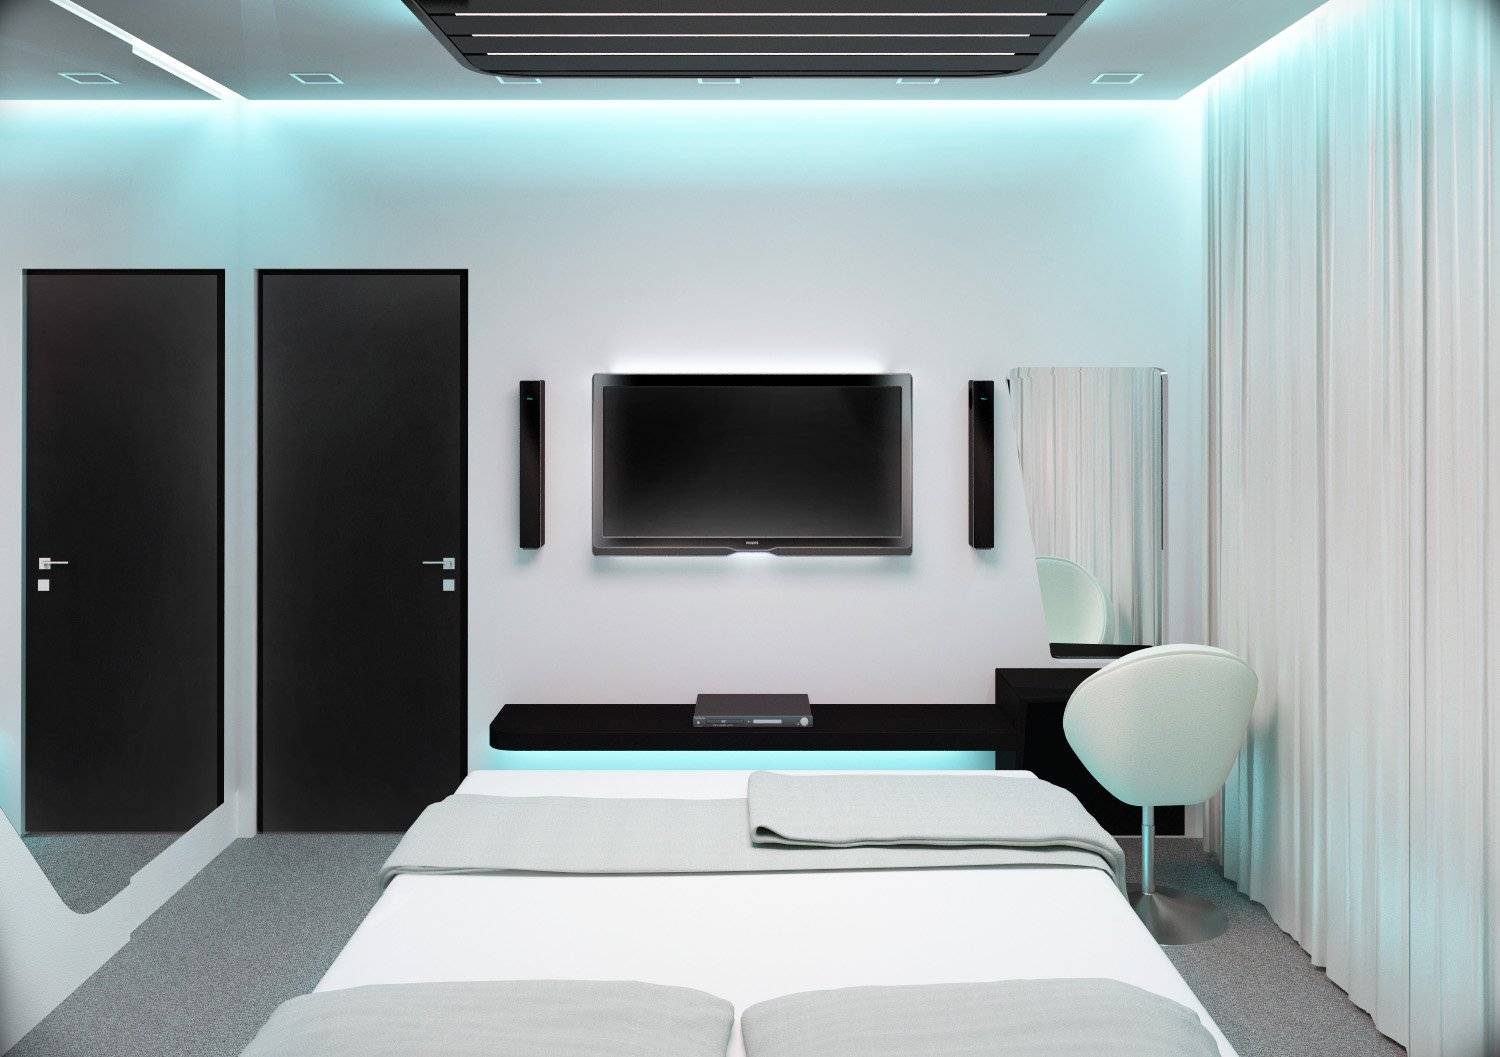 Спальни в стиле хай-тек - 105 фото с яркими вариантами обустройства